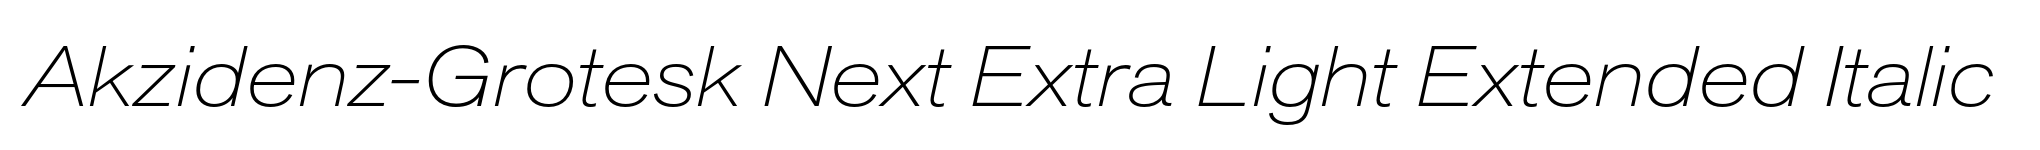 Akzidenz-Grotesk Next Extra Light Extended Italic image